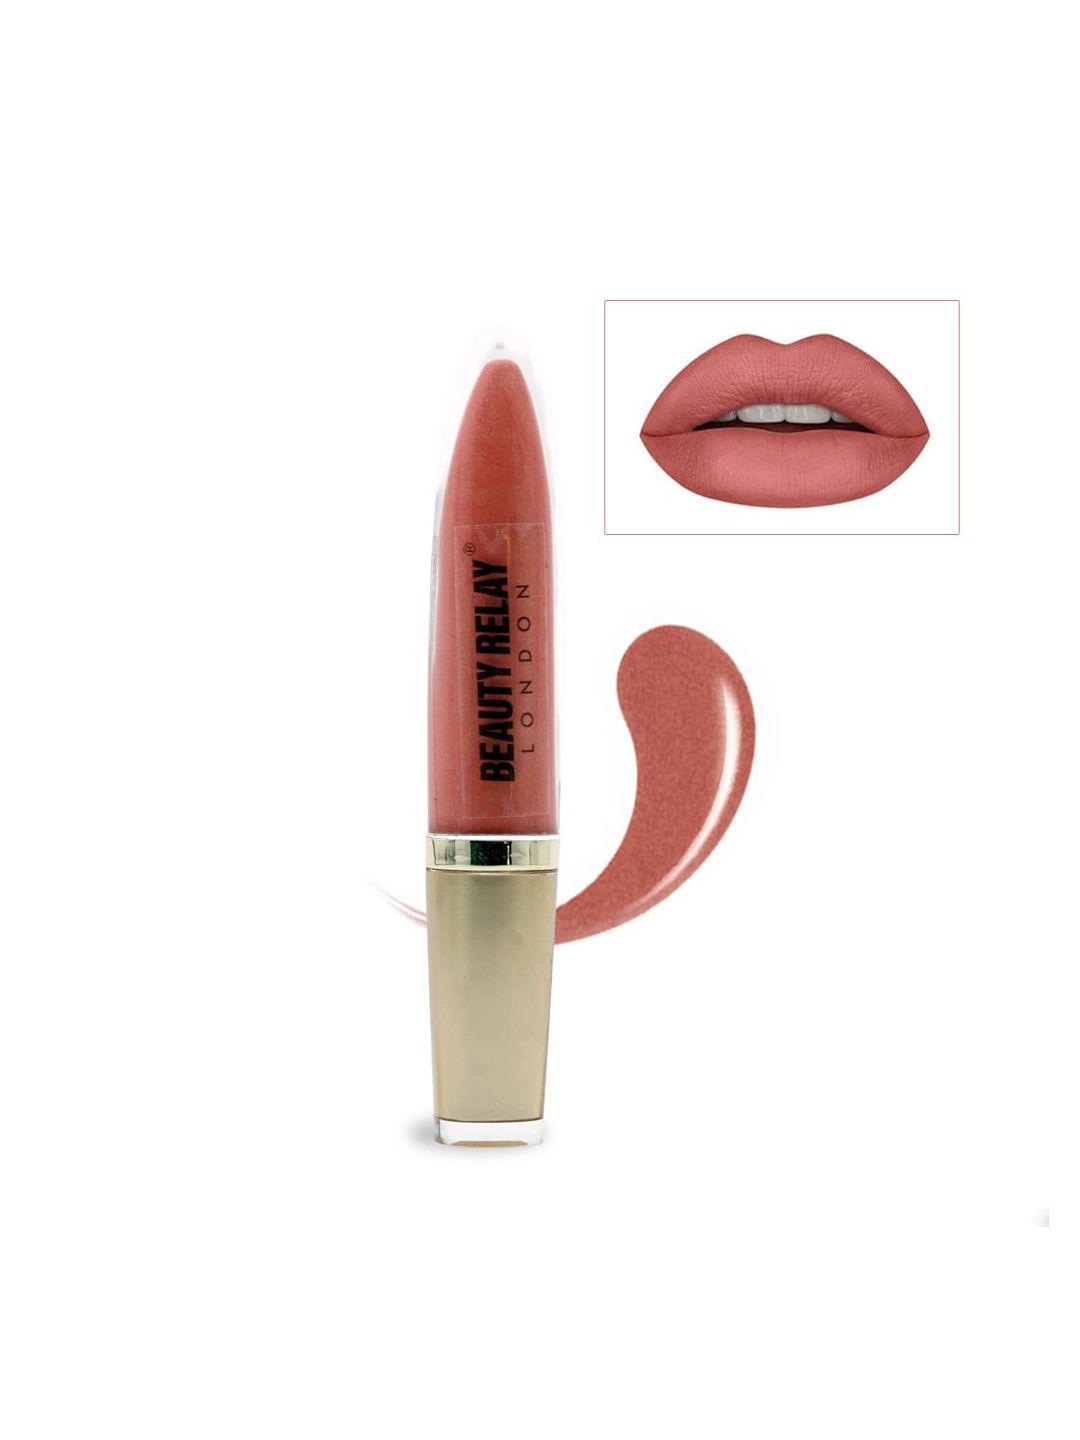 beautyrelay london marker lip & cheek gleam lip gloss 5g - tempting rose